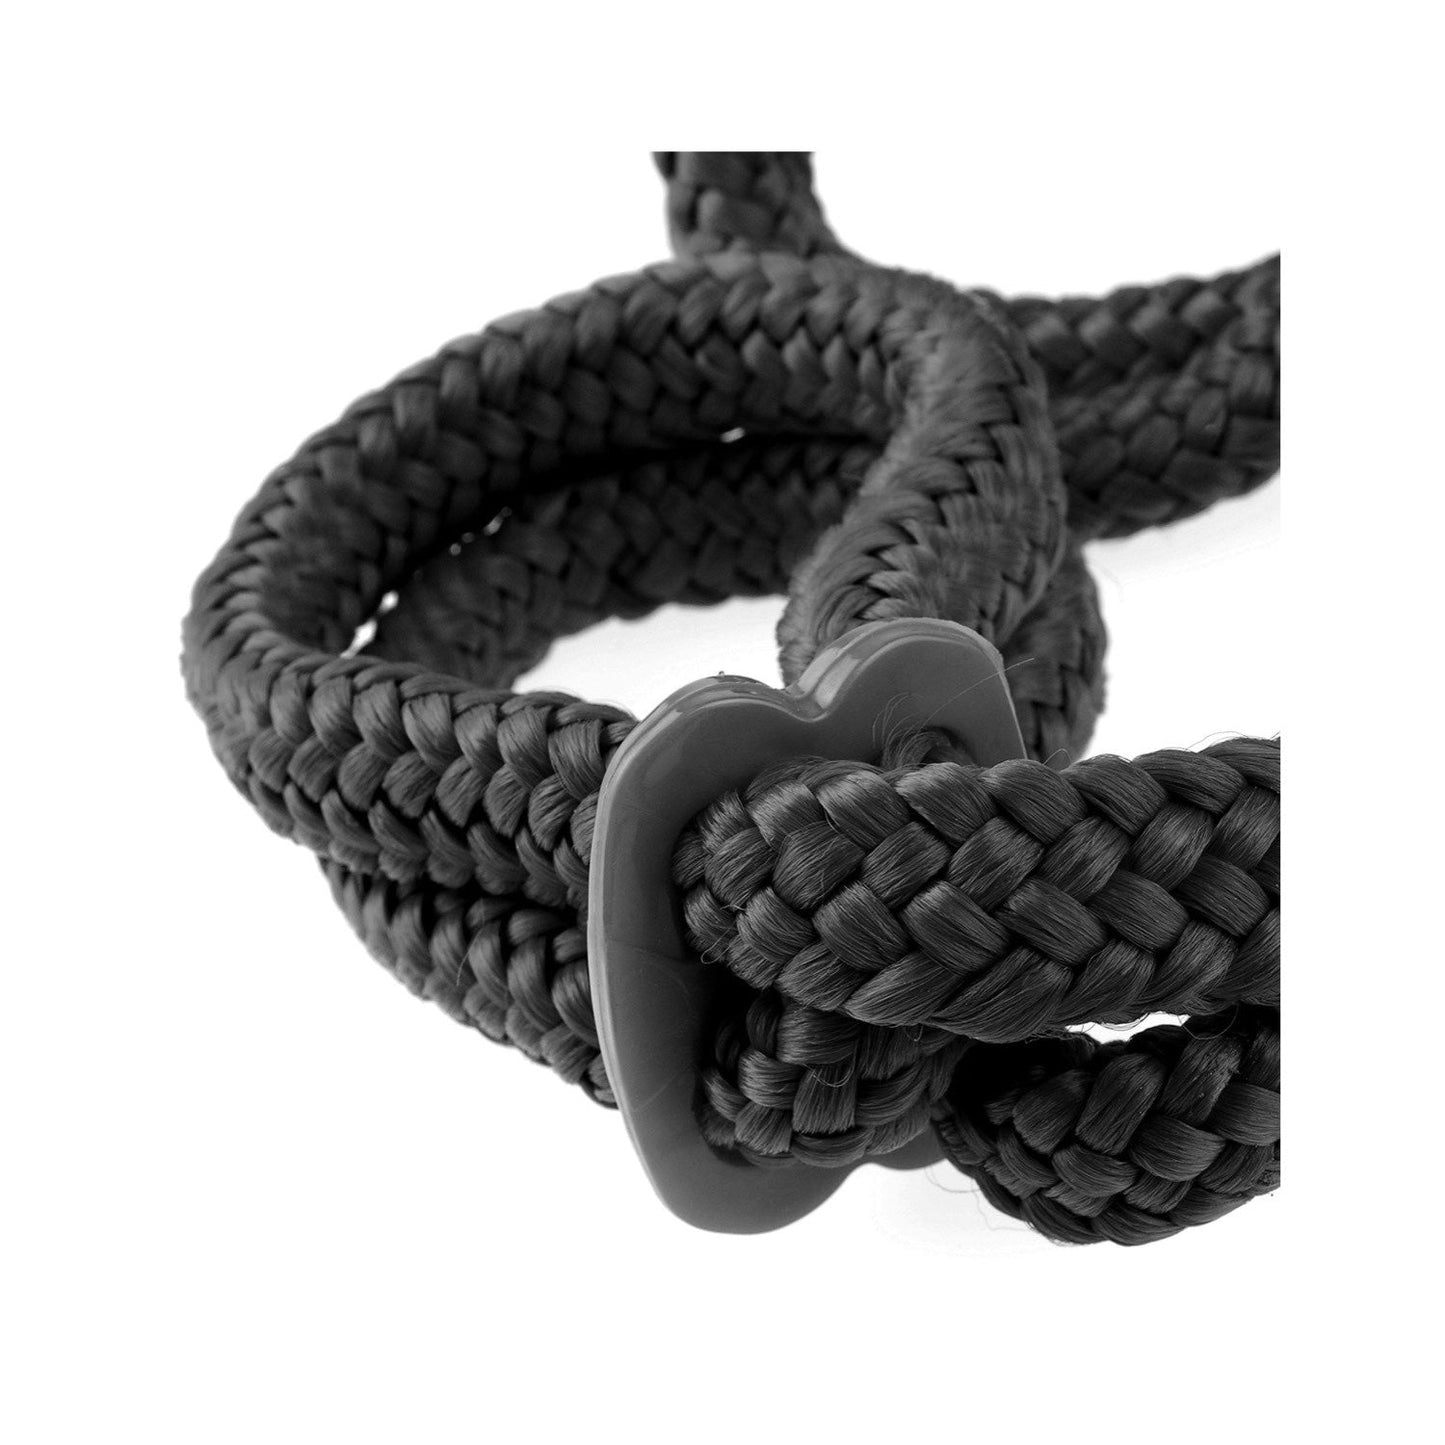 Silk Rope Love Cuffs - Black Restraints